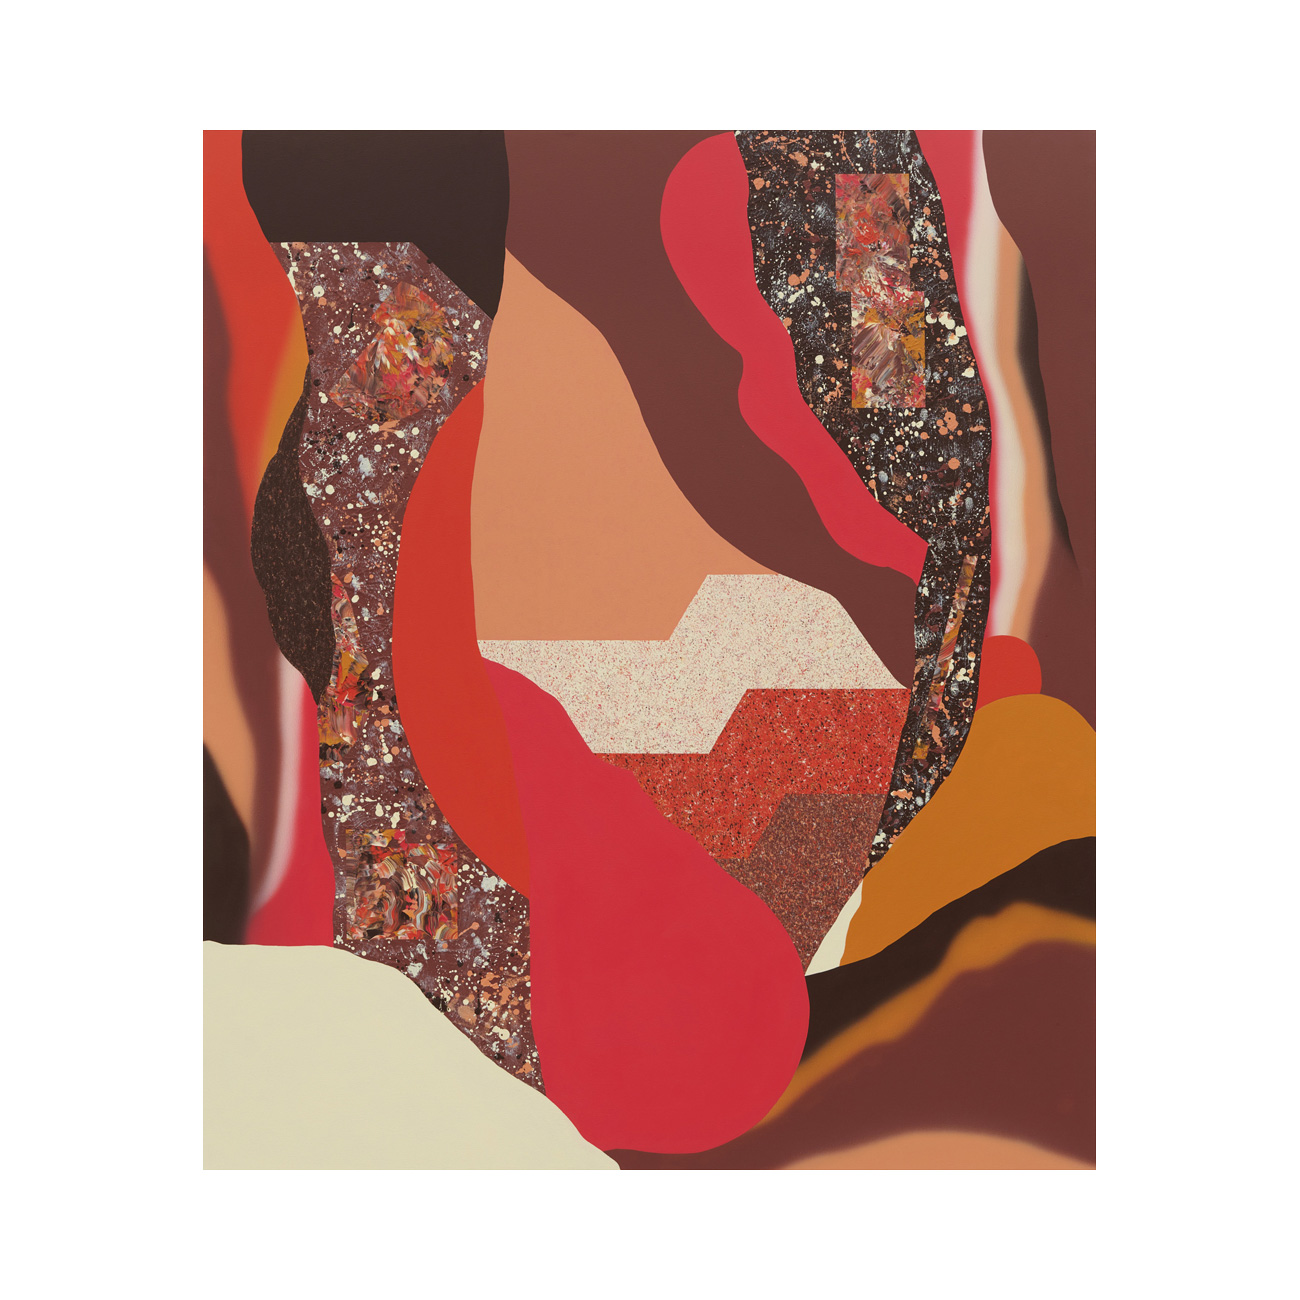 Verschiebung/rot-braun . 2021 . 140 x 120 cm . Acrylic on canvas